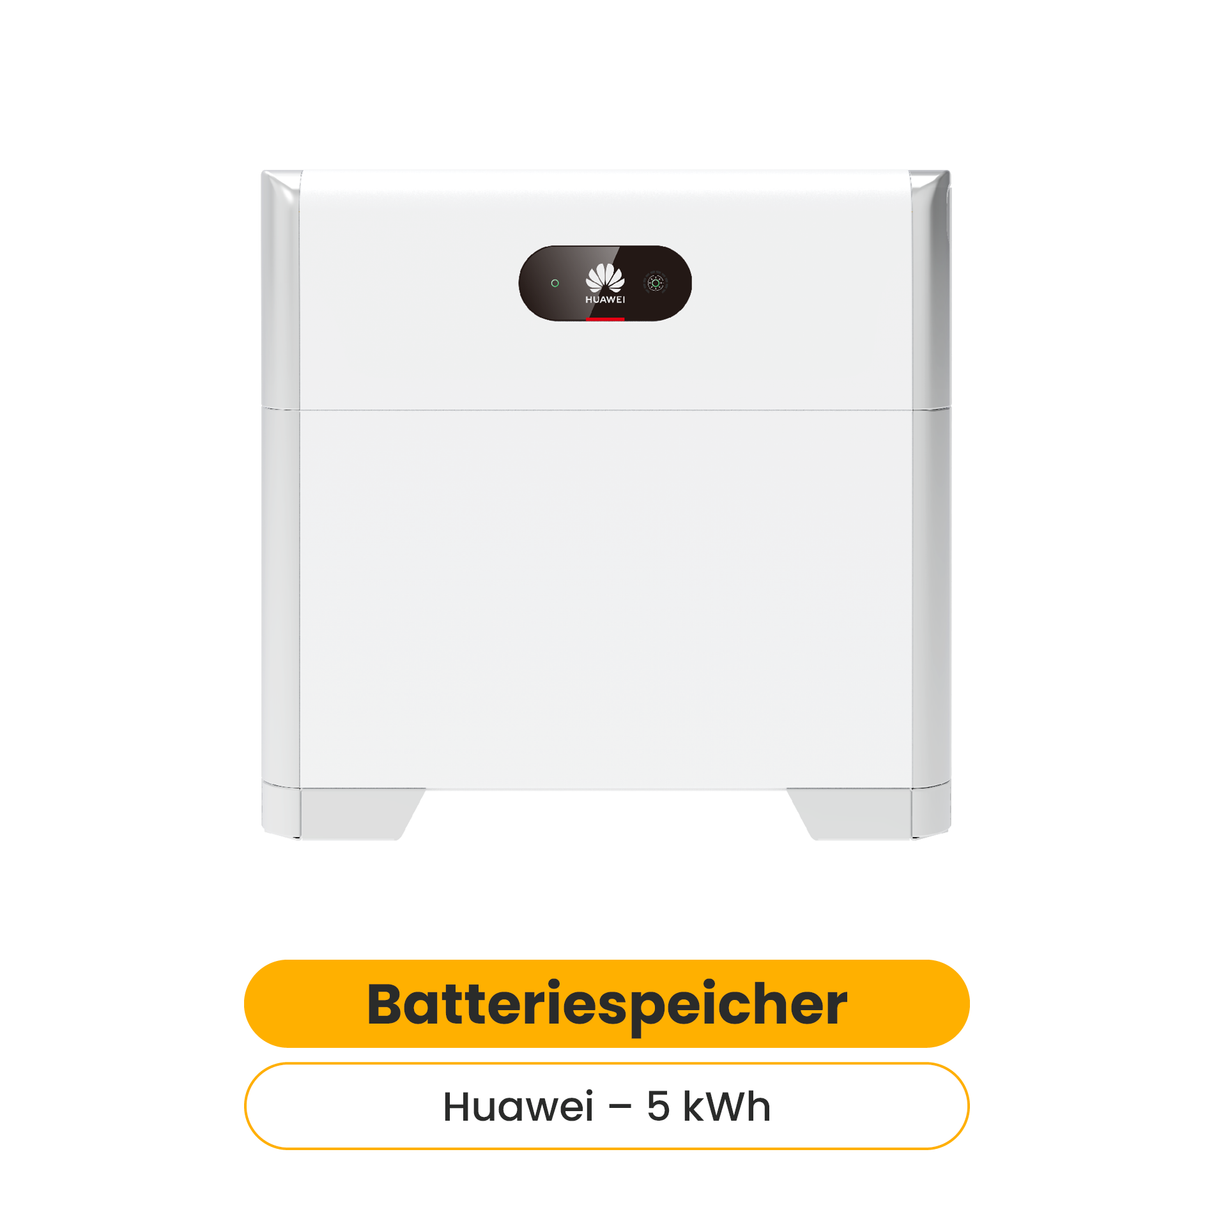 Huawei Batteriespeicher LUNA2000-5-S0 5 kWh